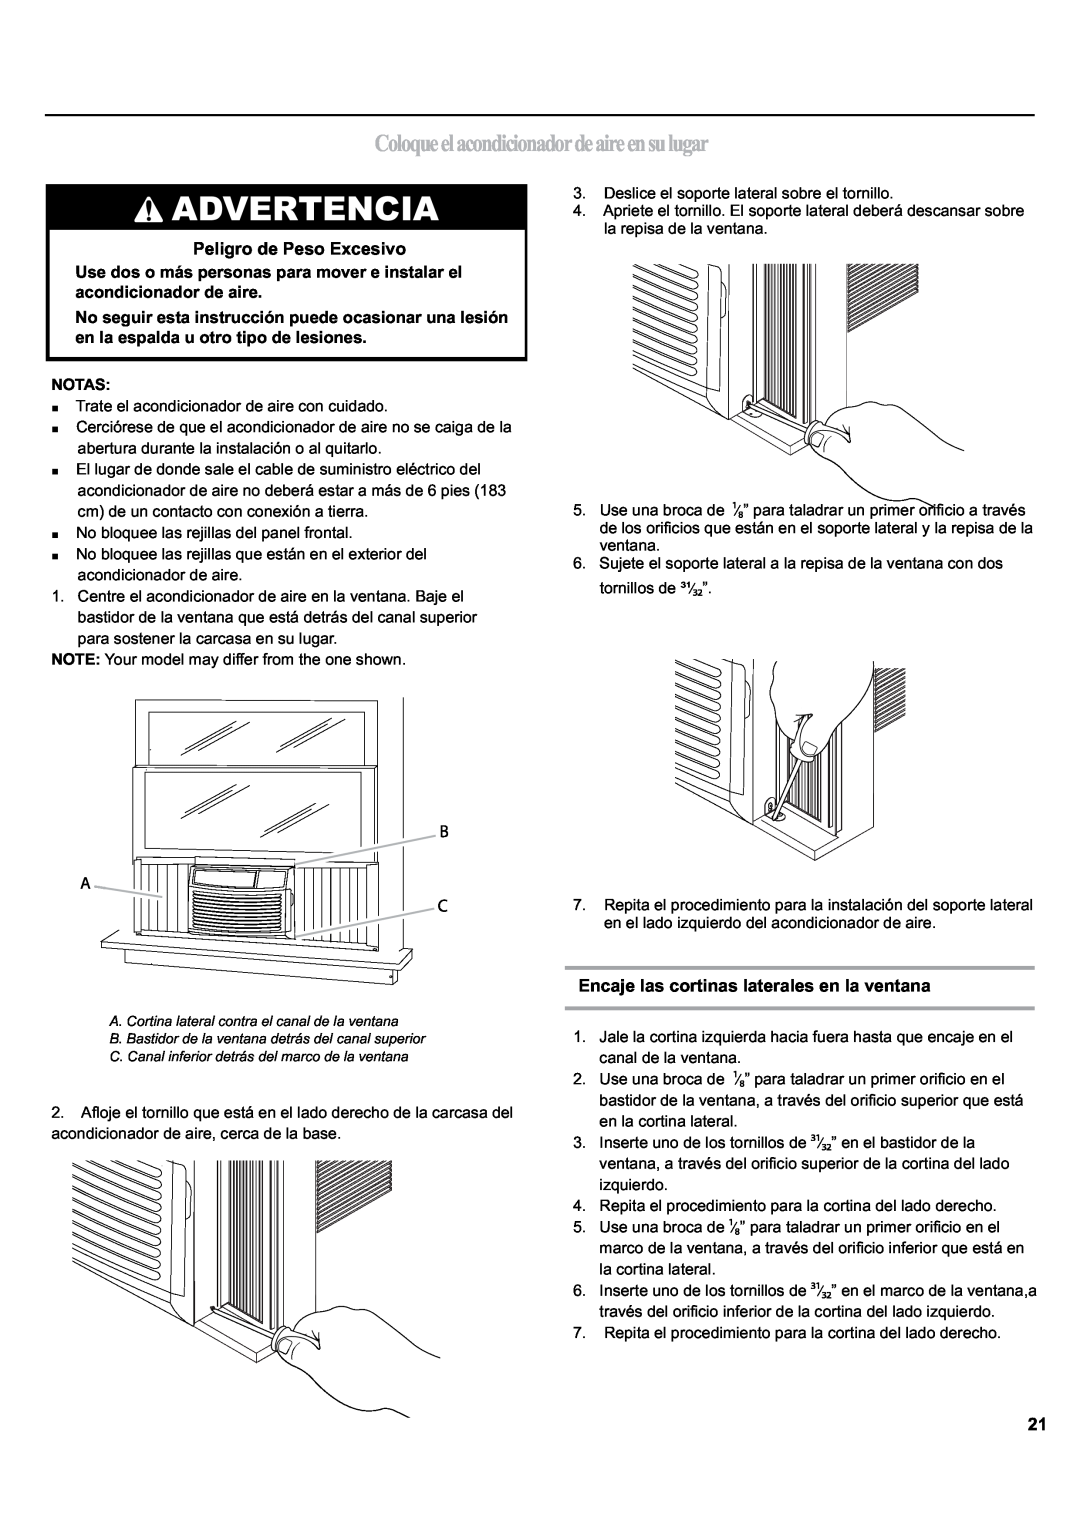 Haier ESA405K manual Coloqueelacondicionadordeaireensulugar, Advertencia, Peligro de Peso Excesivo, B A C 